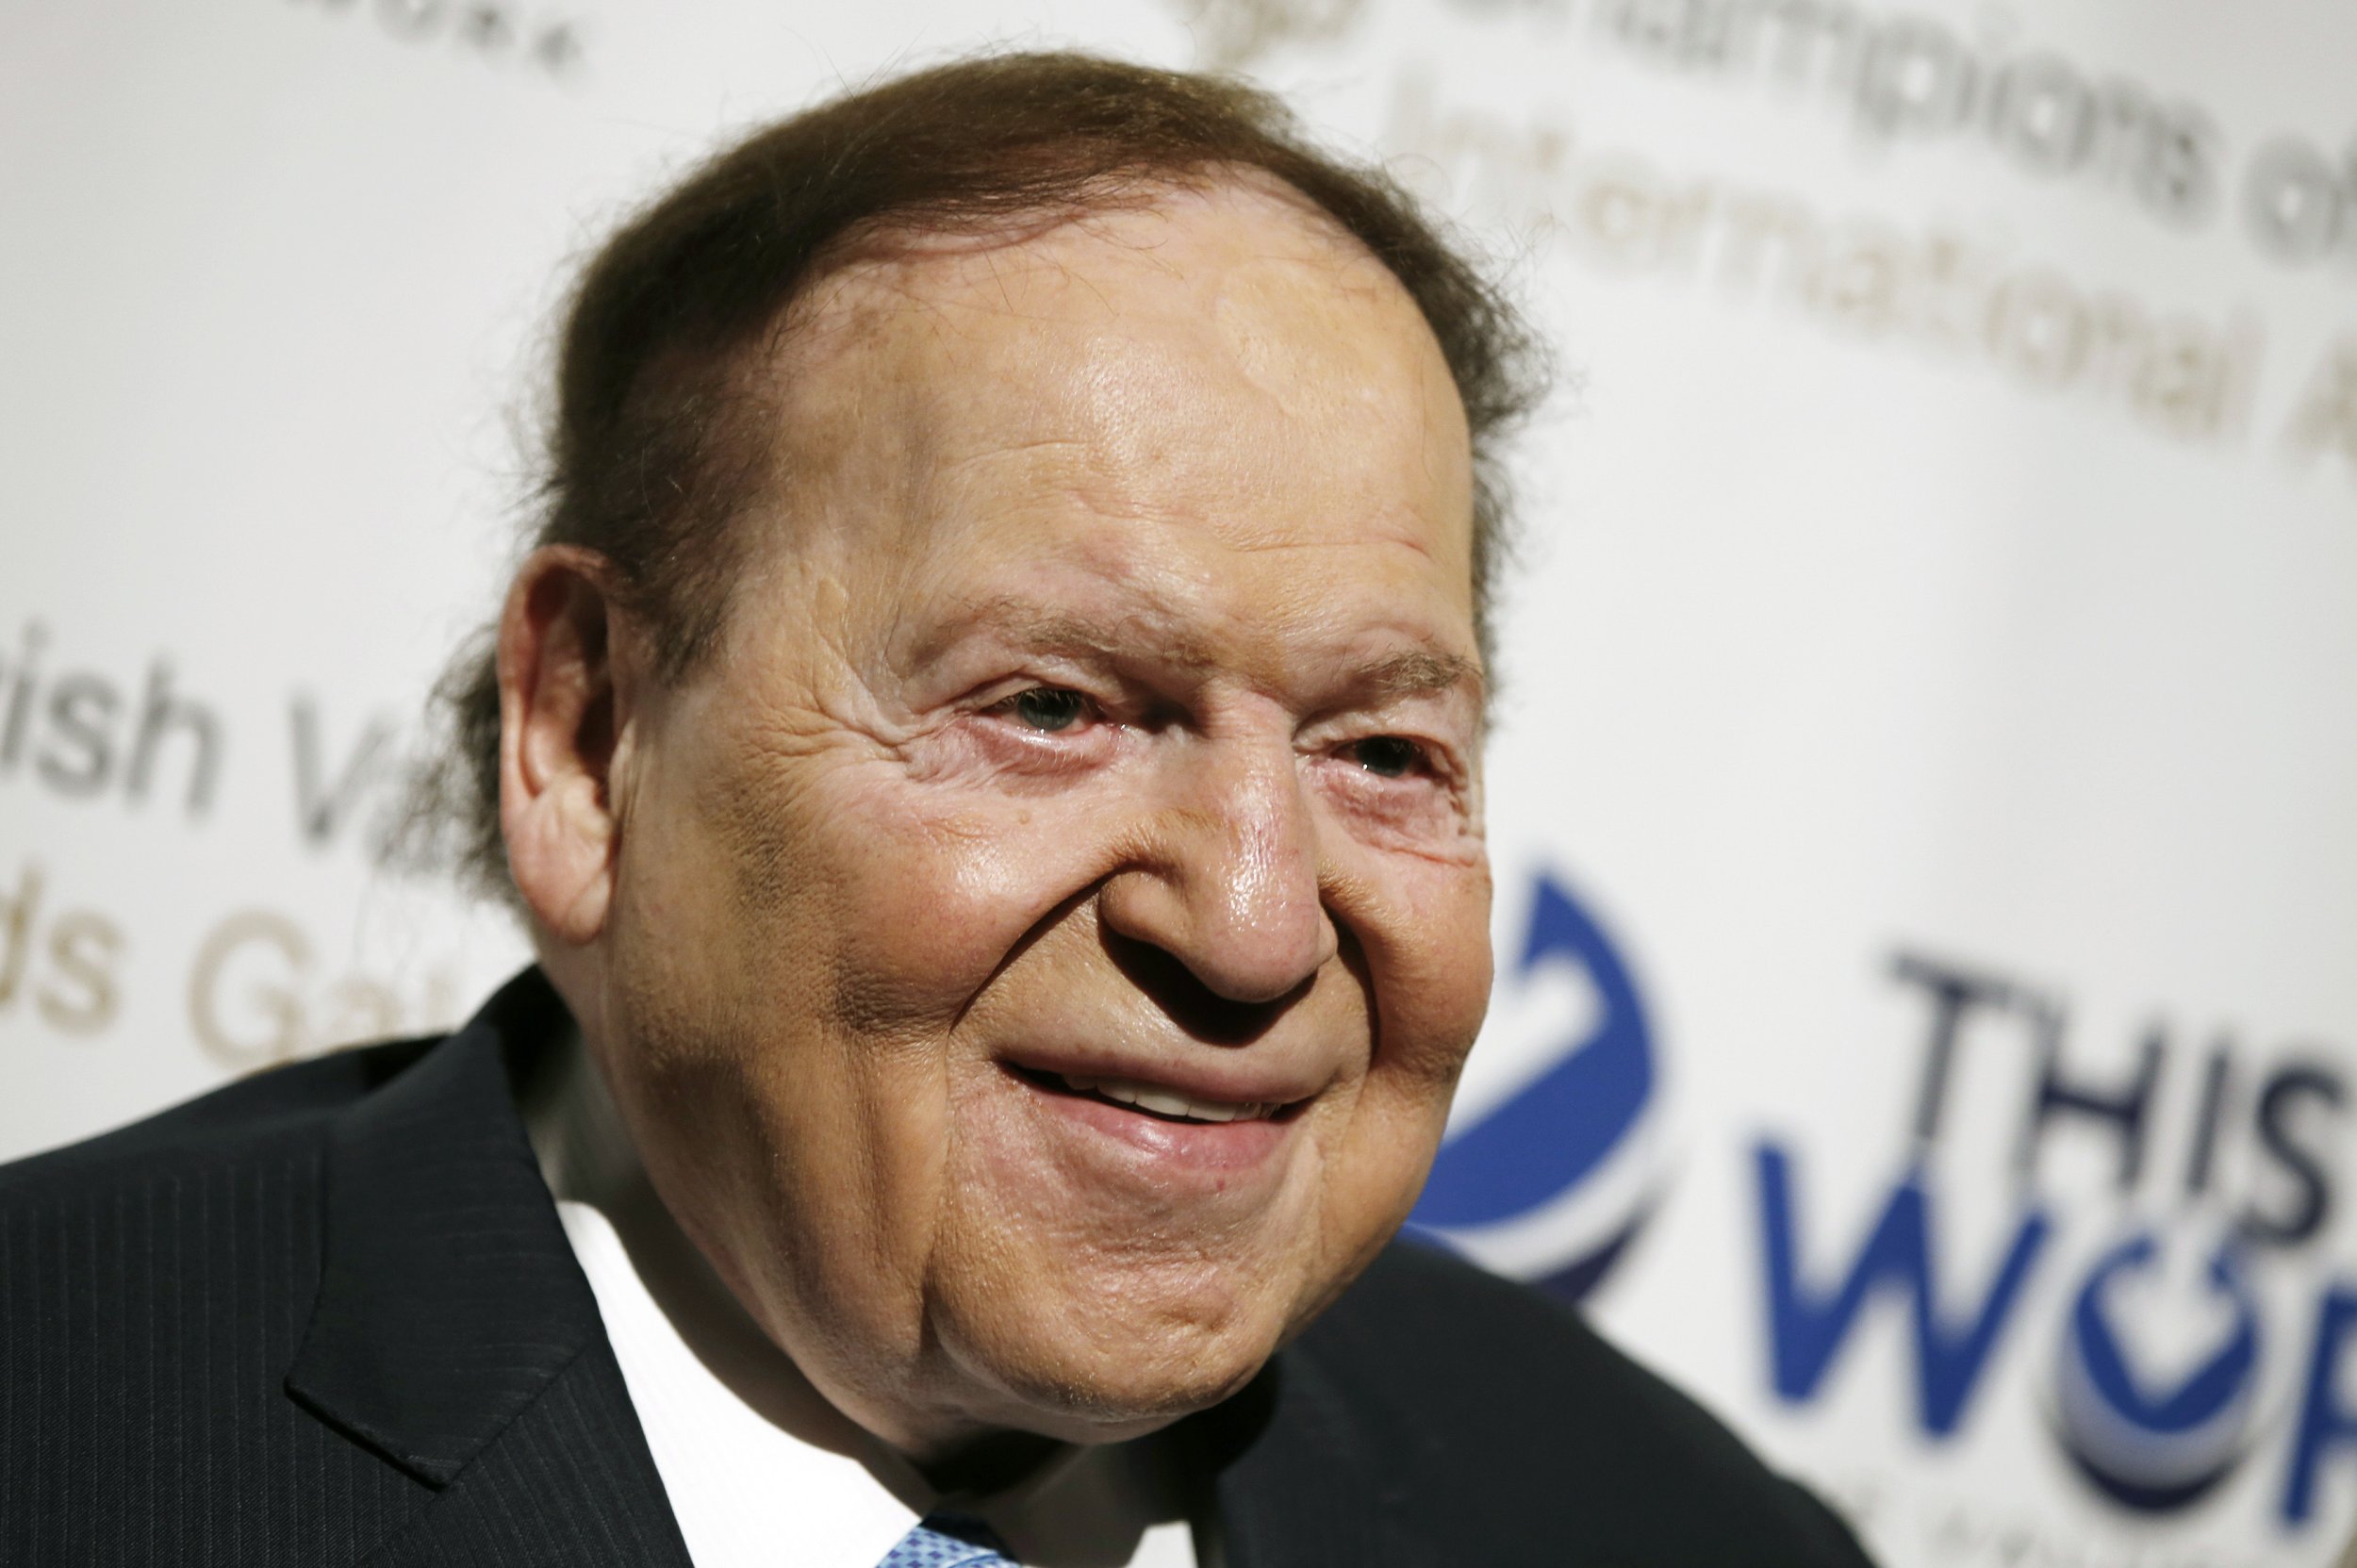 Nevada - Sheldon Adelson Reuters